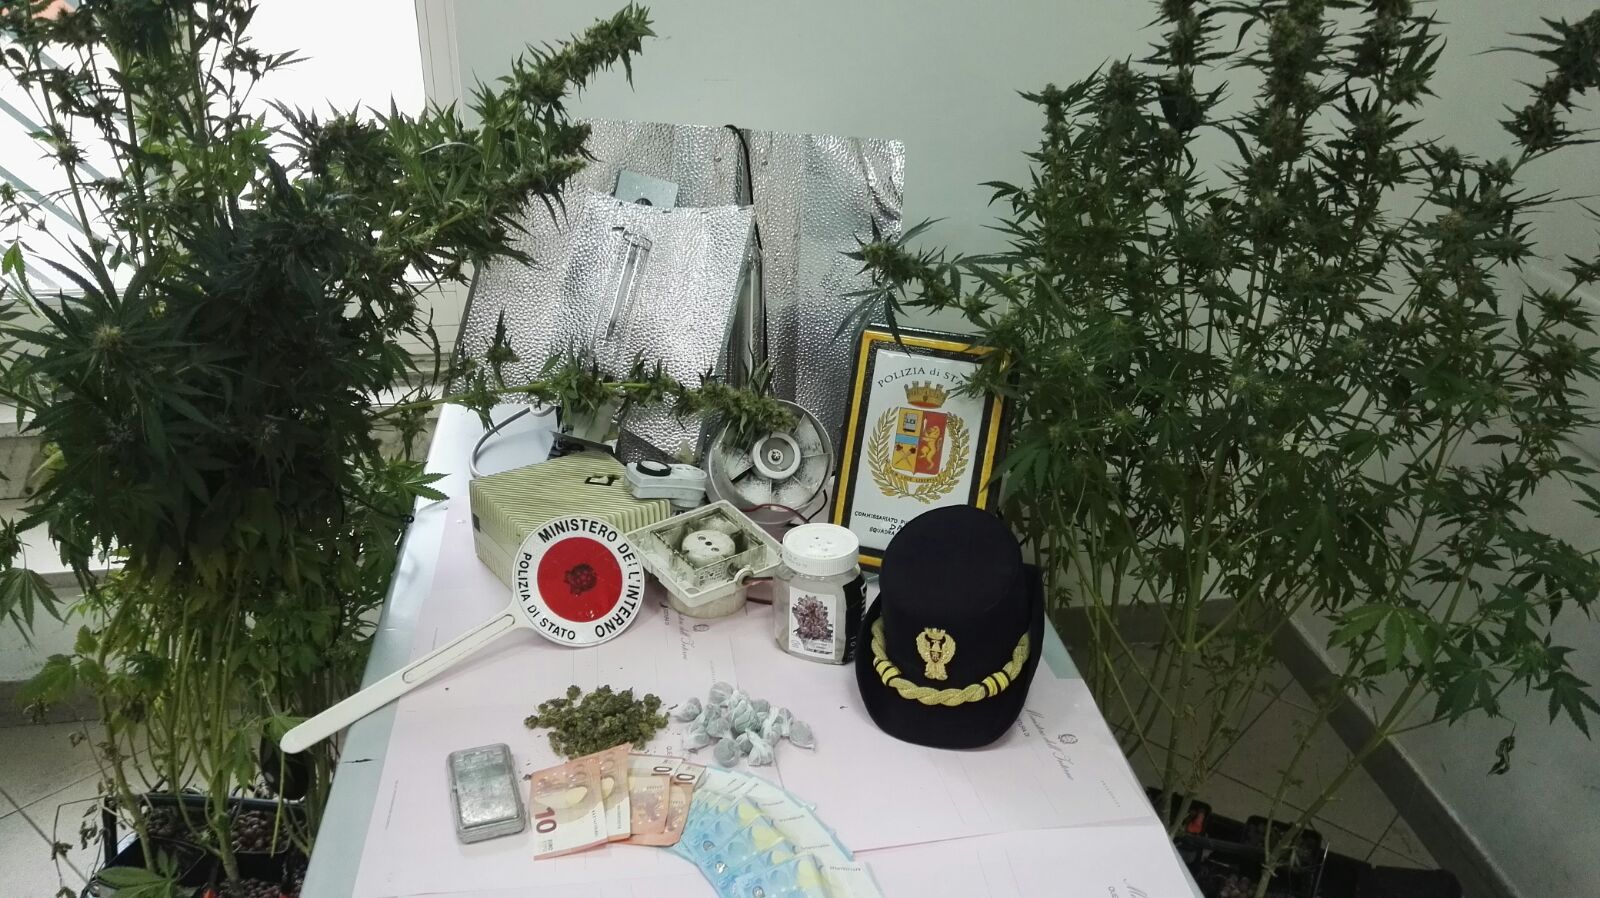 Una serra casalinga di marijuana sequestrata nel quartiere Montesanto: sequestrati 13 arbusti